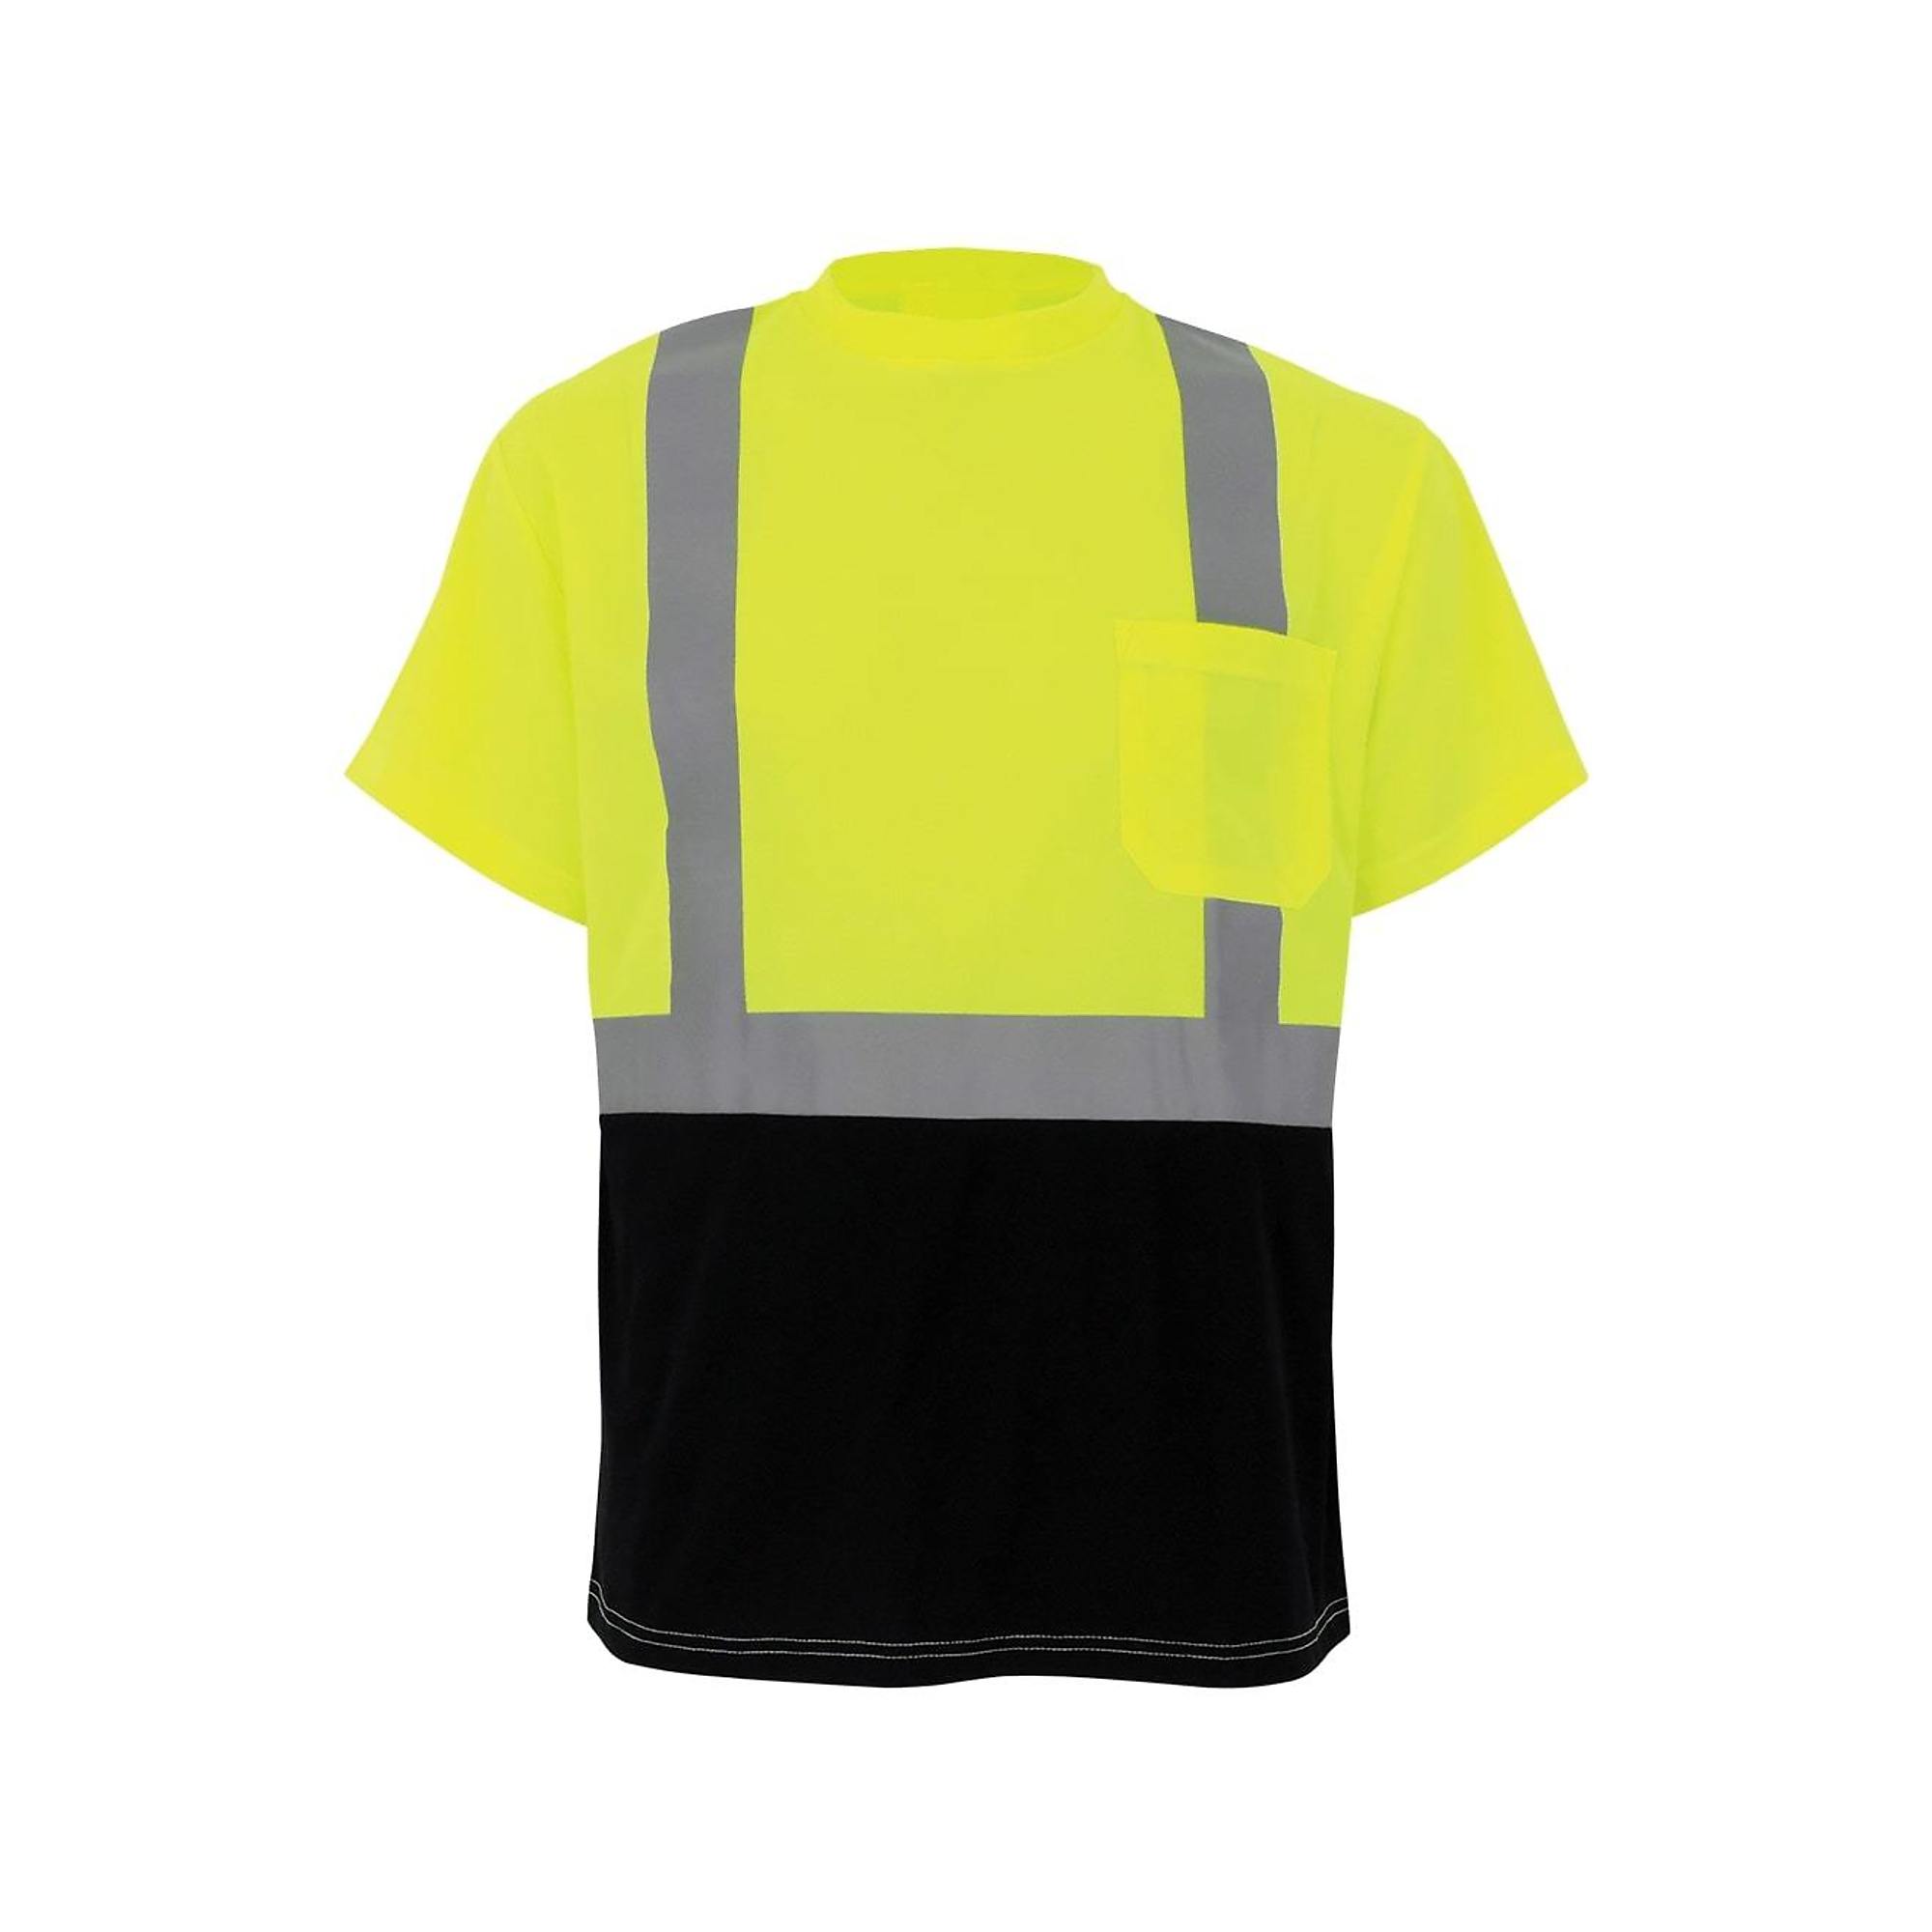 FrogWear, HV Yellow/Green, Class 2 Self-Wicking, Short-Sleeve Shirt, Size L, Model GLO-007B-L